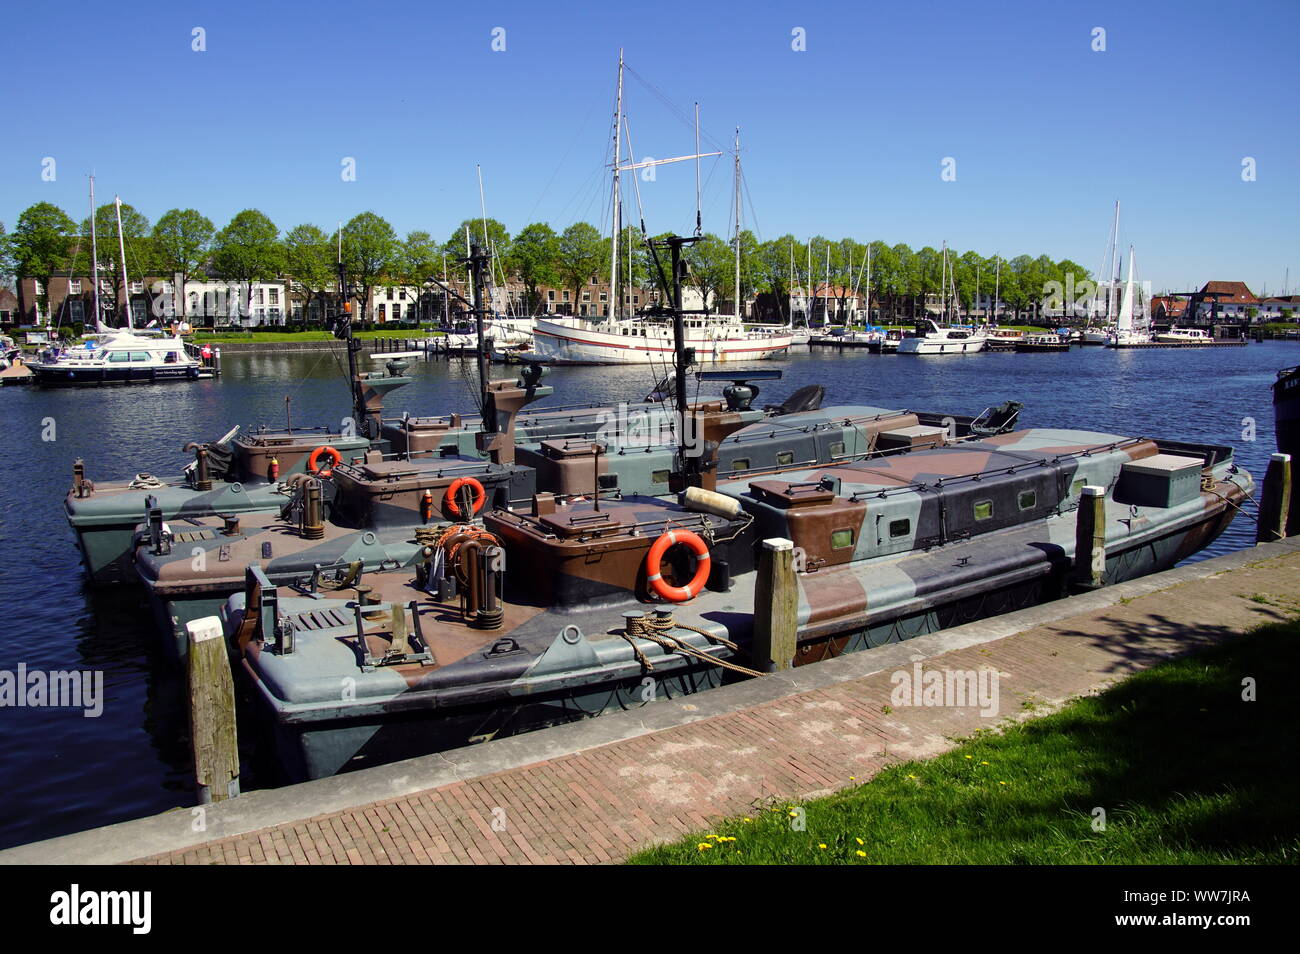 Medemblik, the Netherlands - May 6, 2018: Dutch Military Landing Crafts in the harbor of Medemblik. Stock Photo